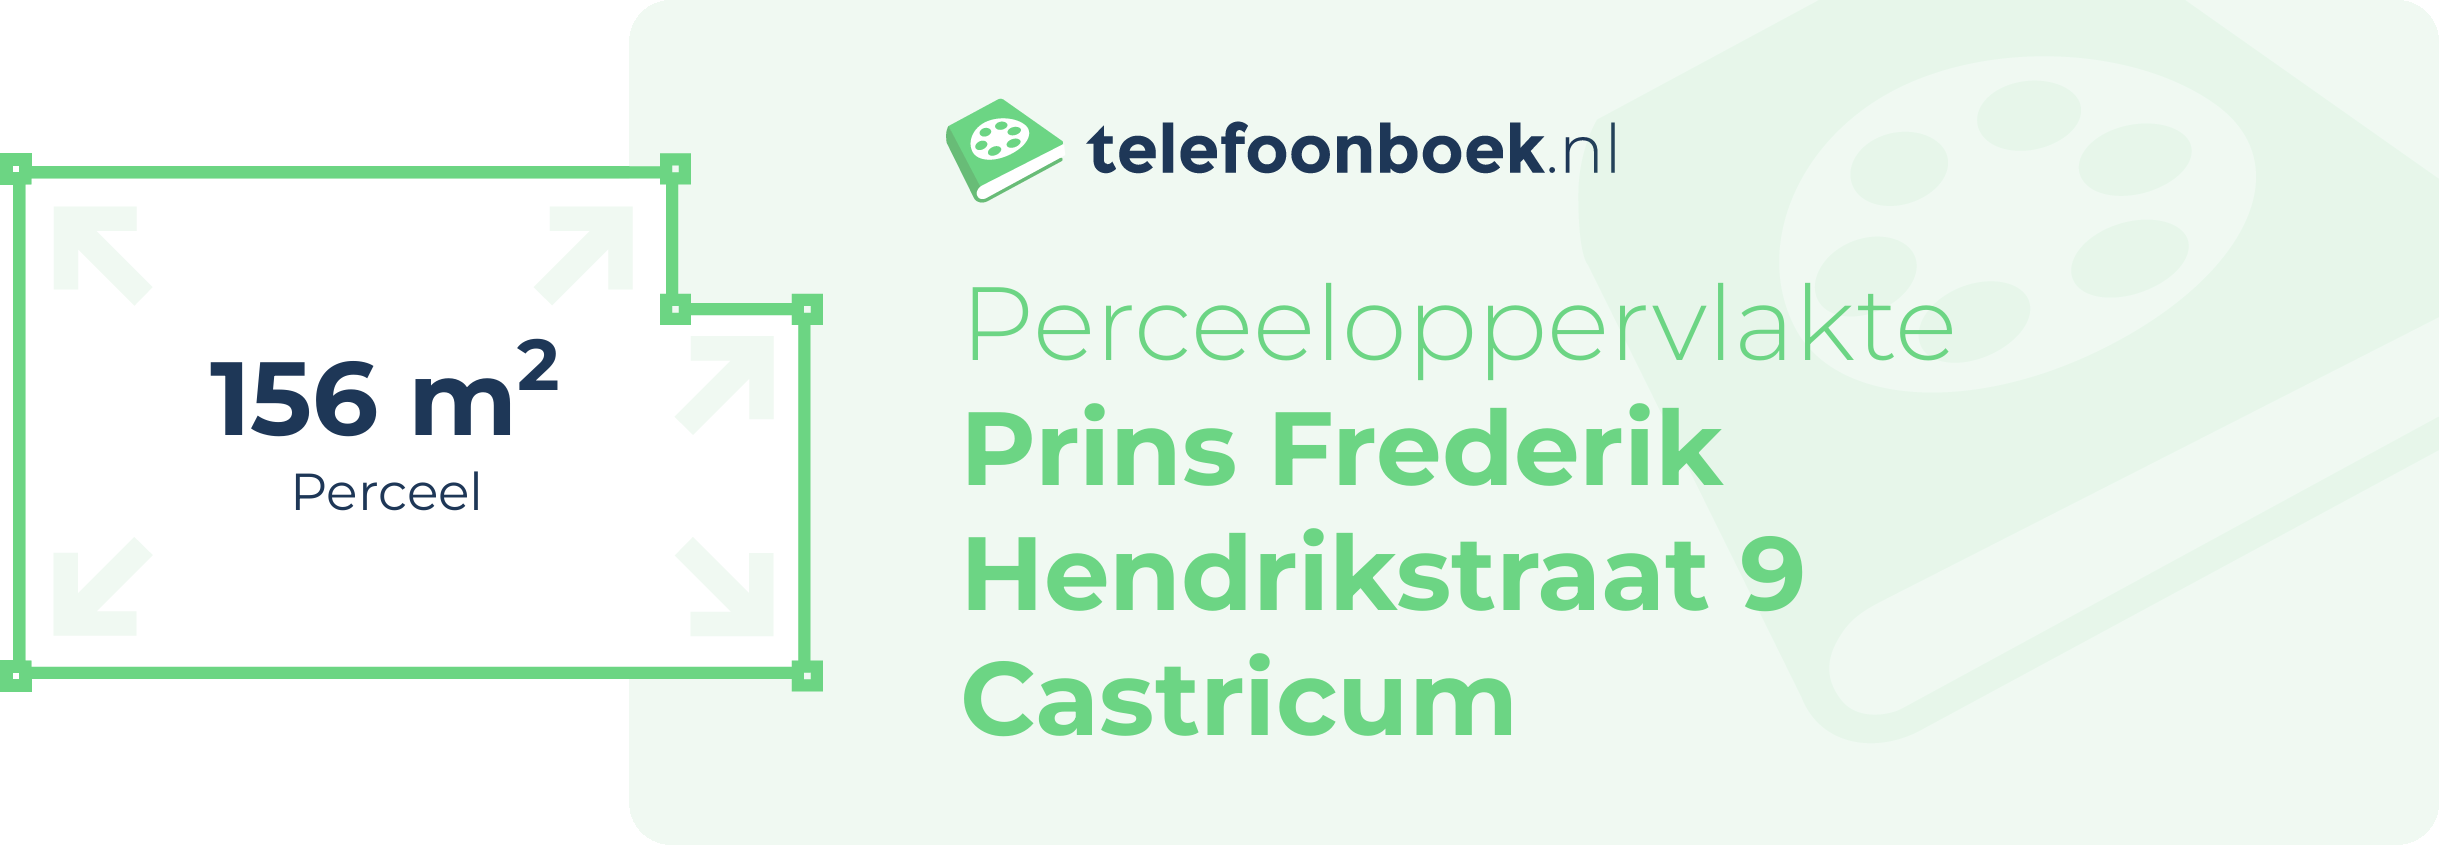 Perceeloppervlakte Prins Frederik Hendrikstraat 9 Castricum